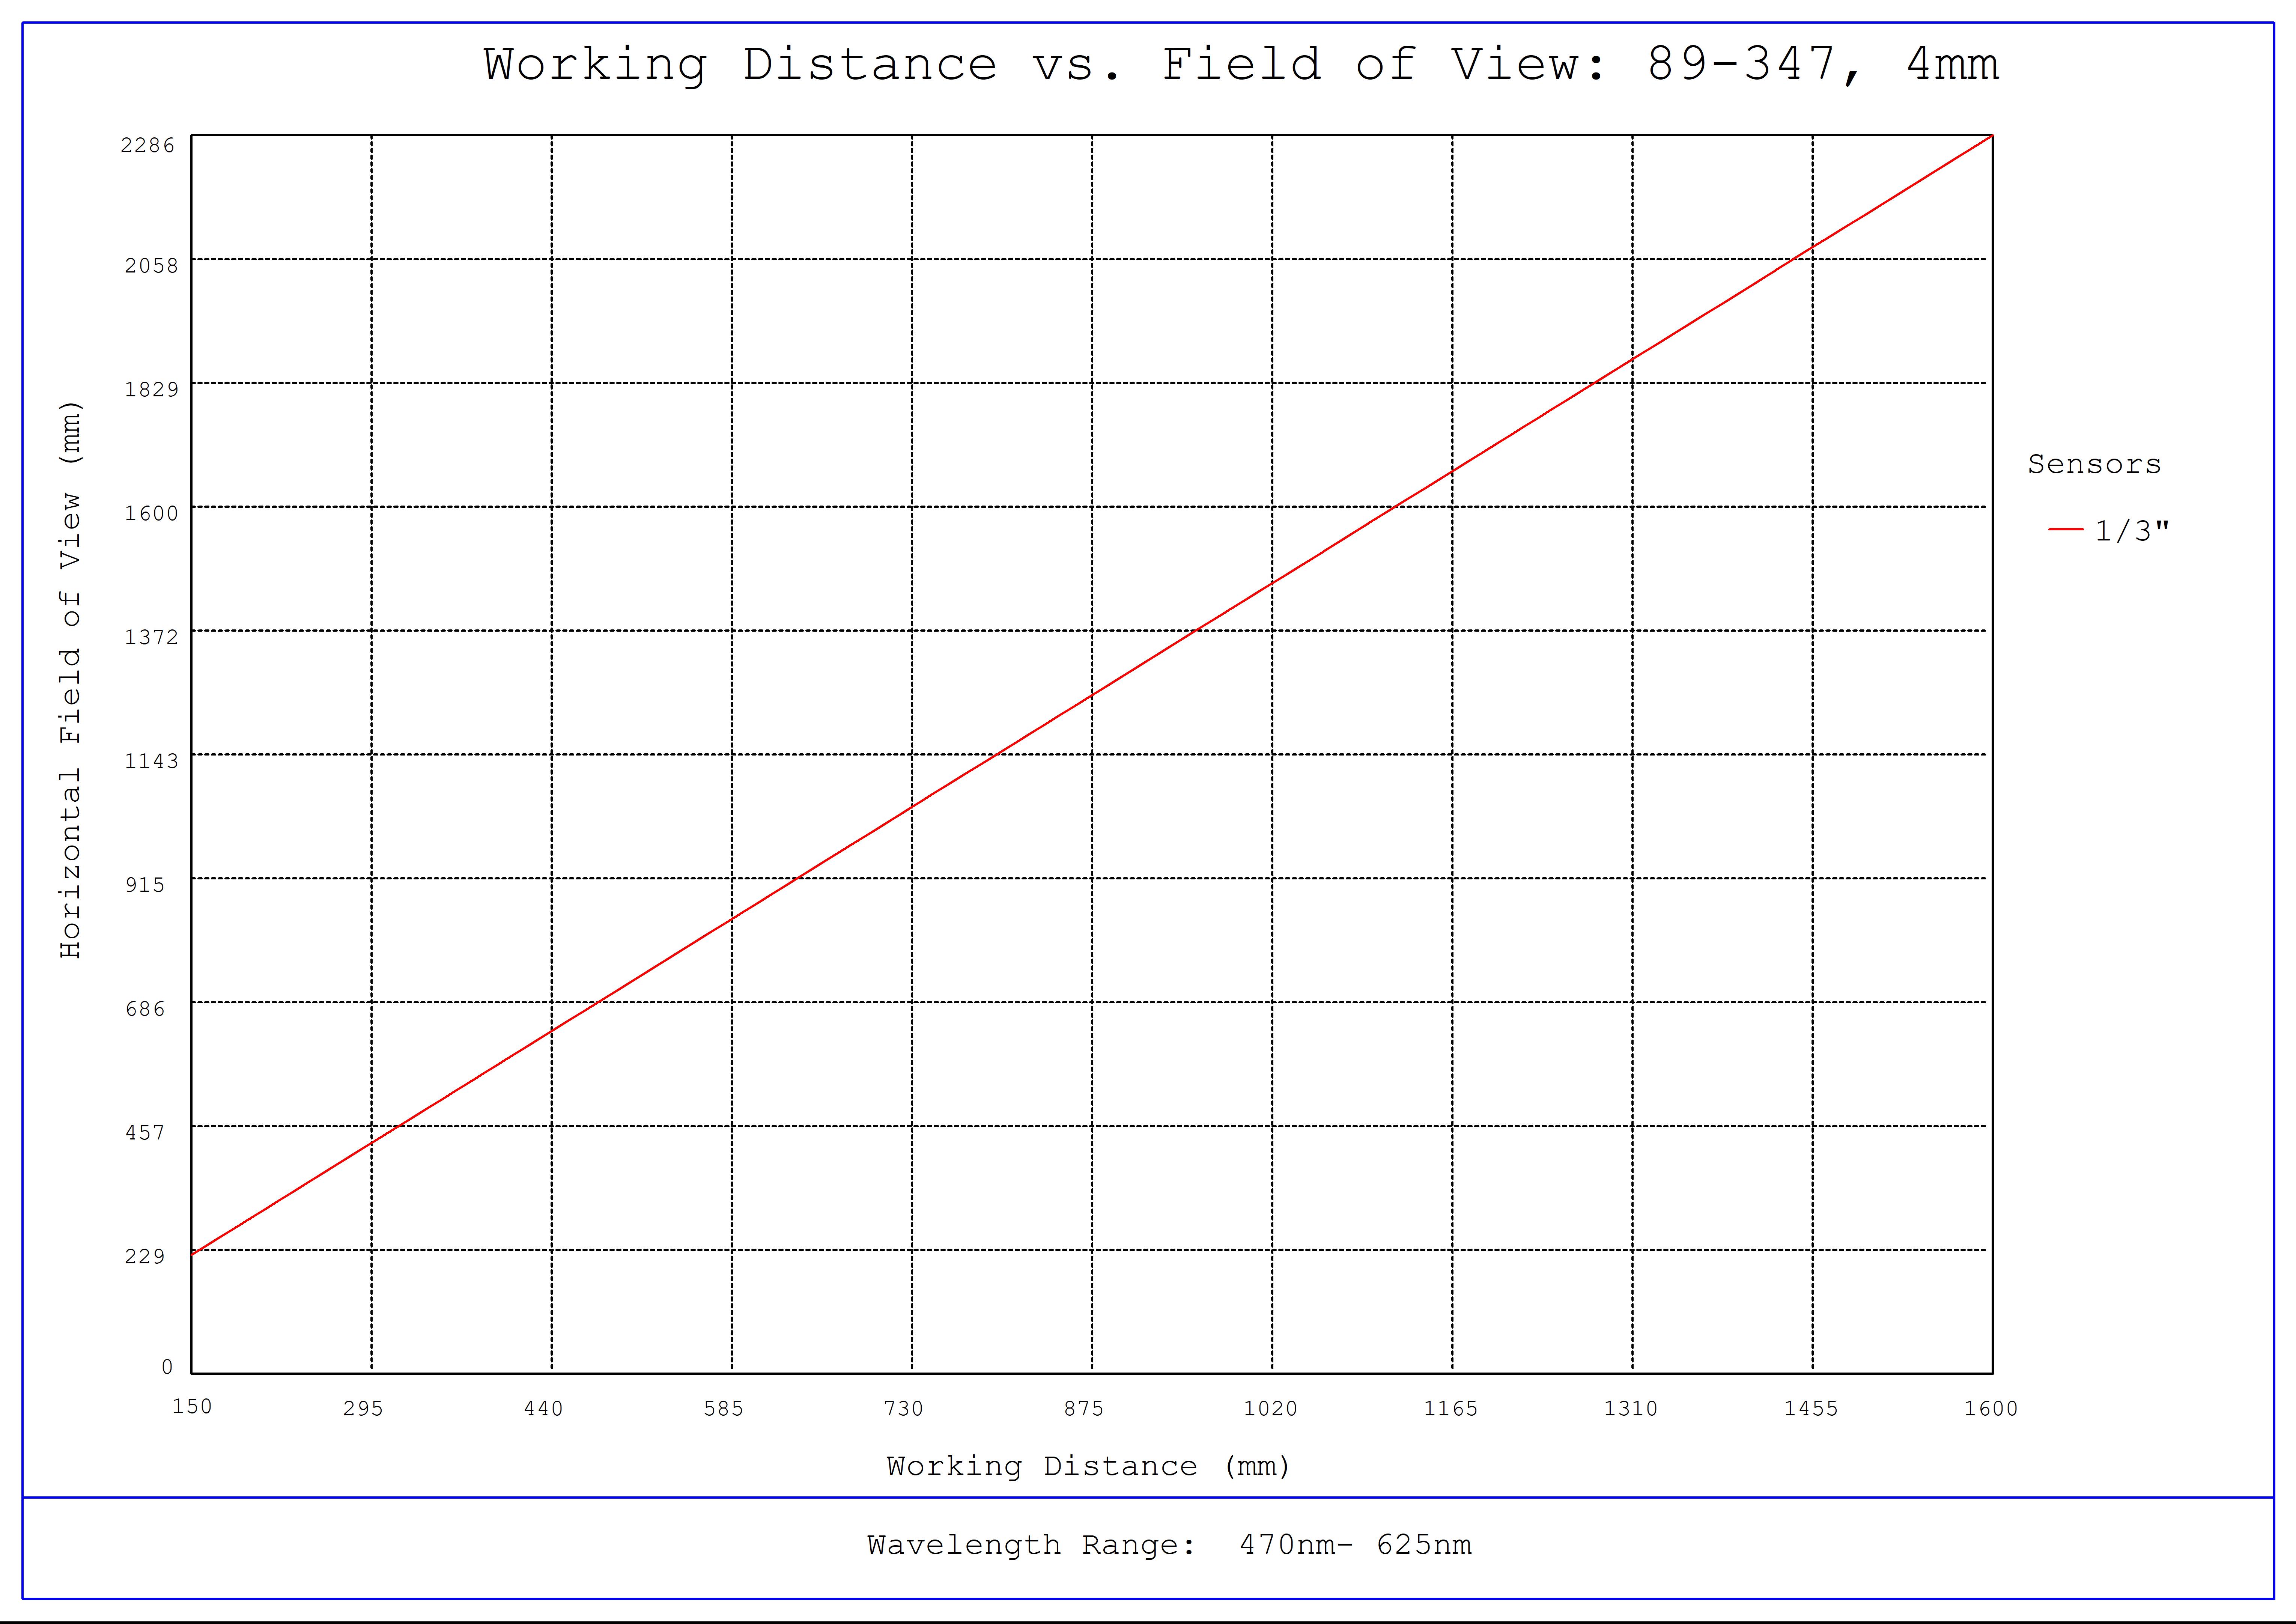 #89-347, 4mm FL f/8.0, Blue Series M12 Lens, Working Distance versus Field of View Plot